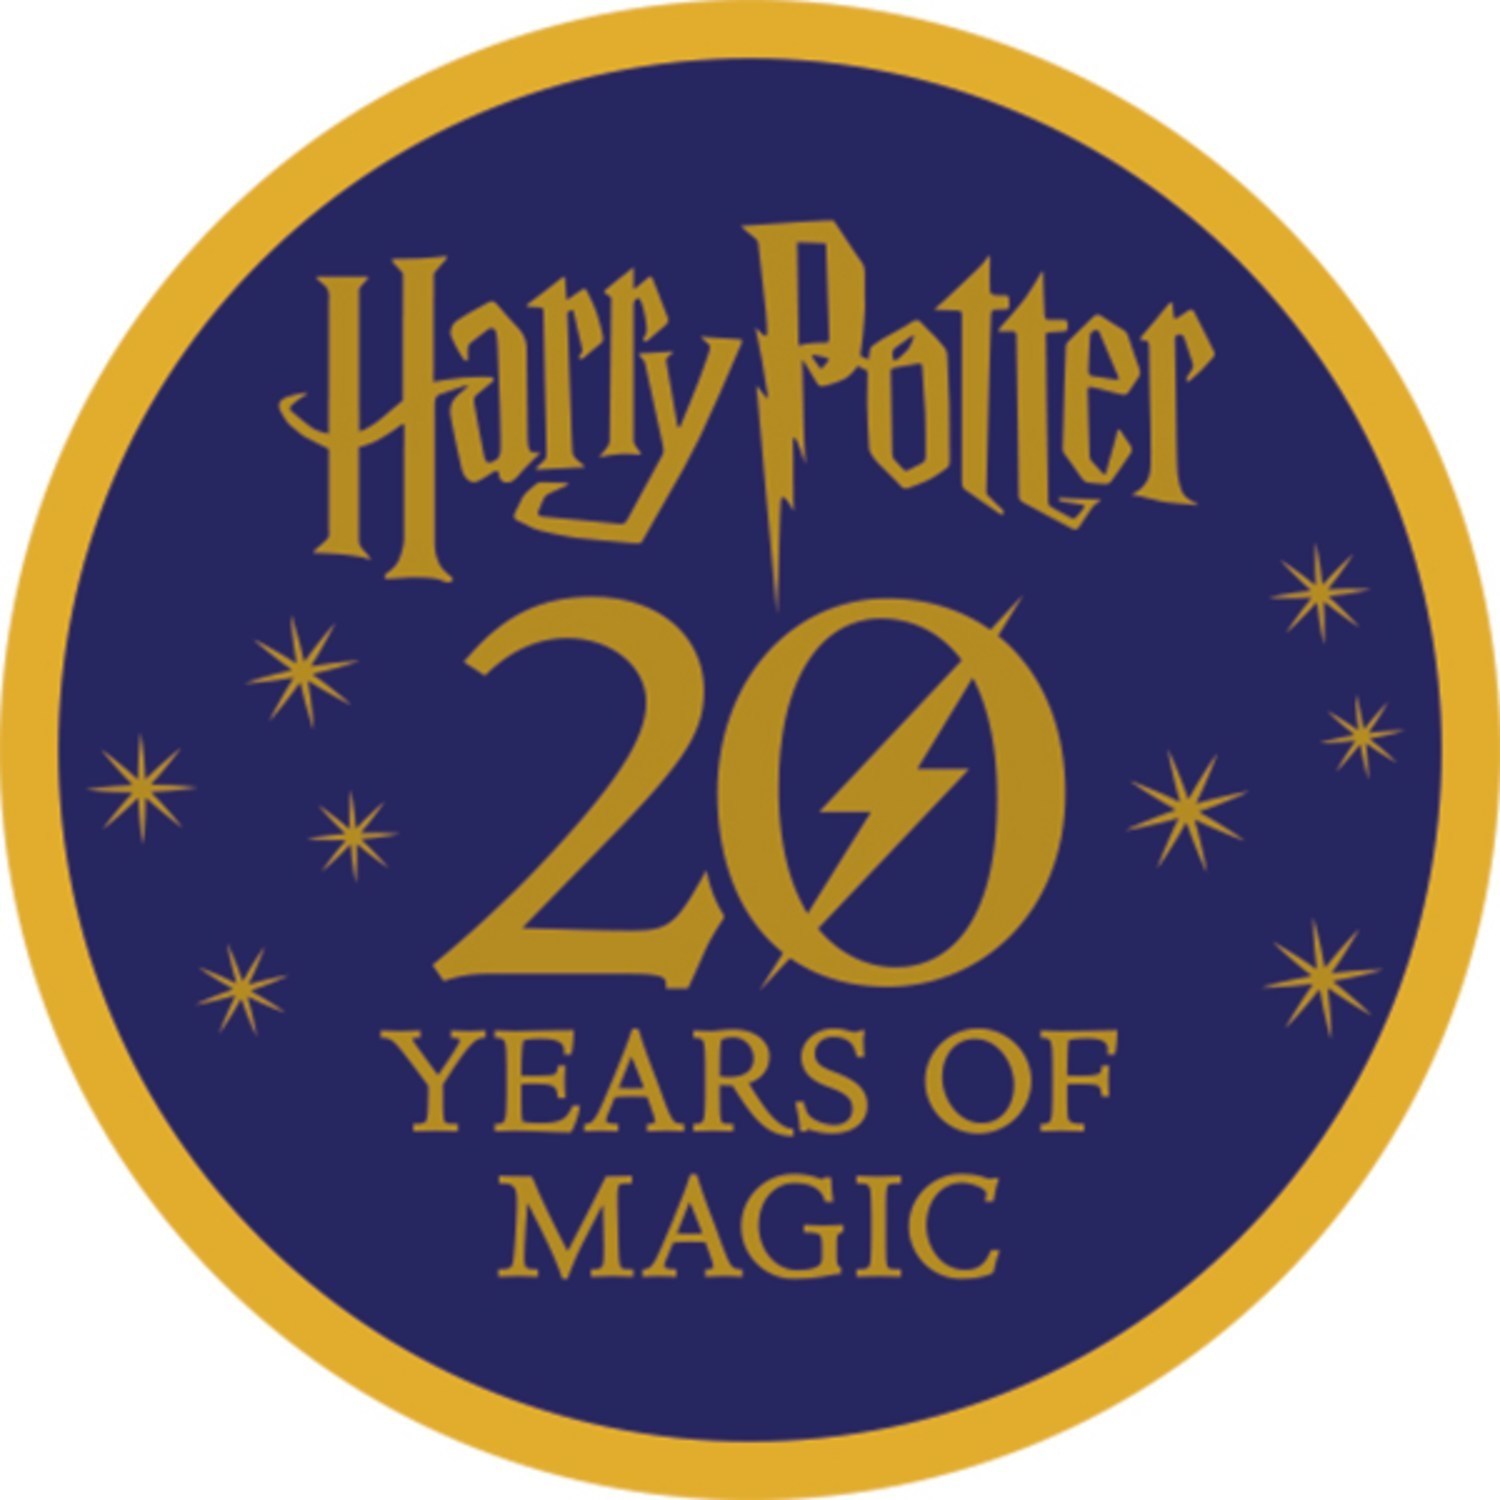 Scholastic 'Harry Potter' boxed set (US) — Harry Potter Fan Zone